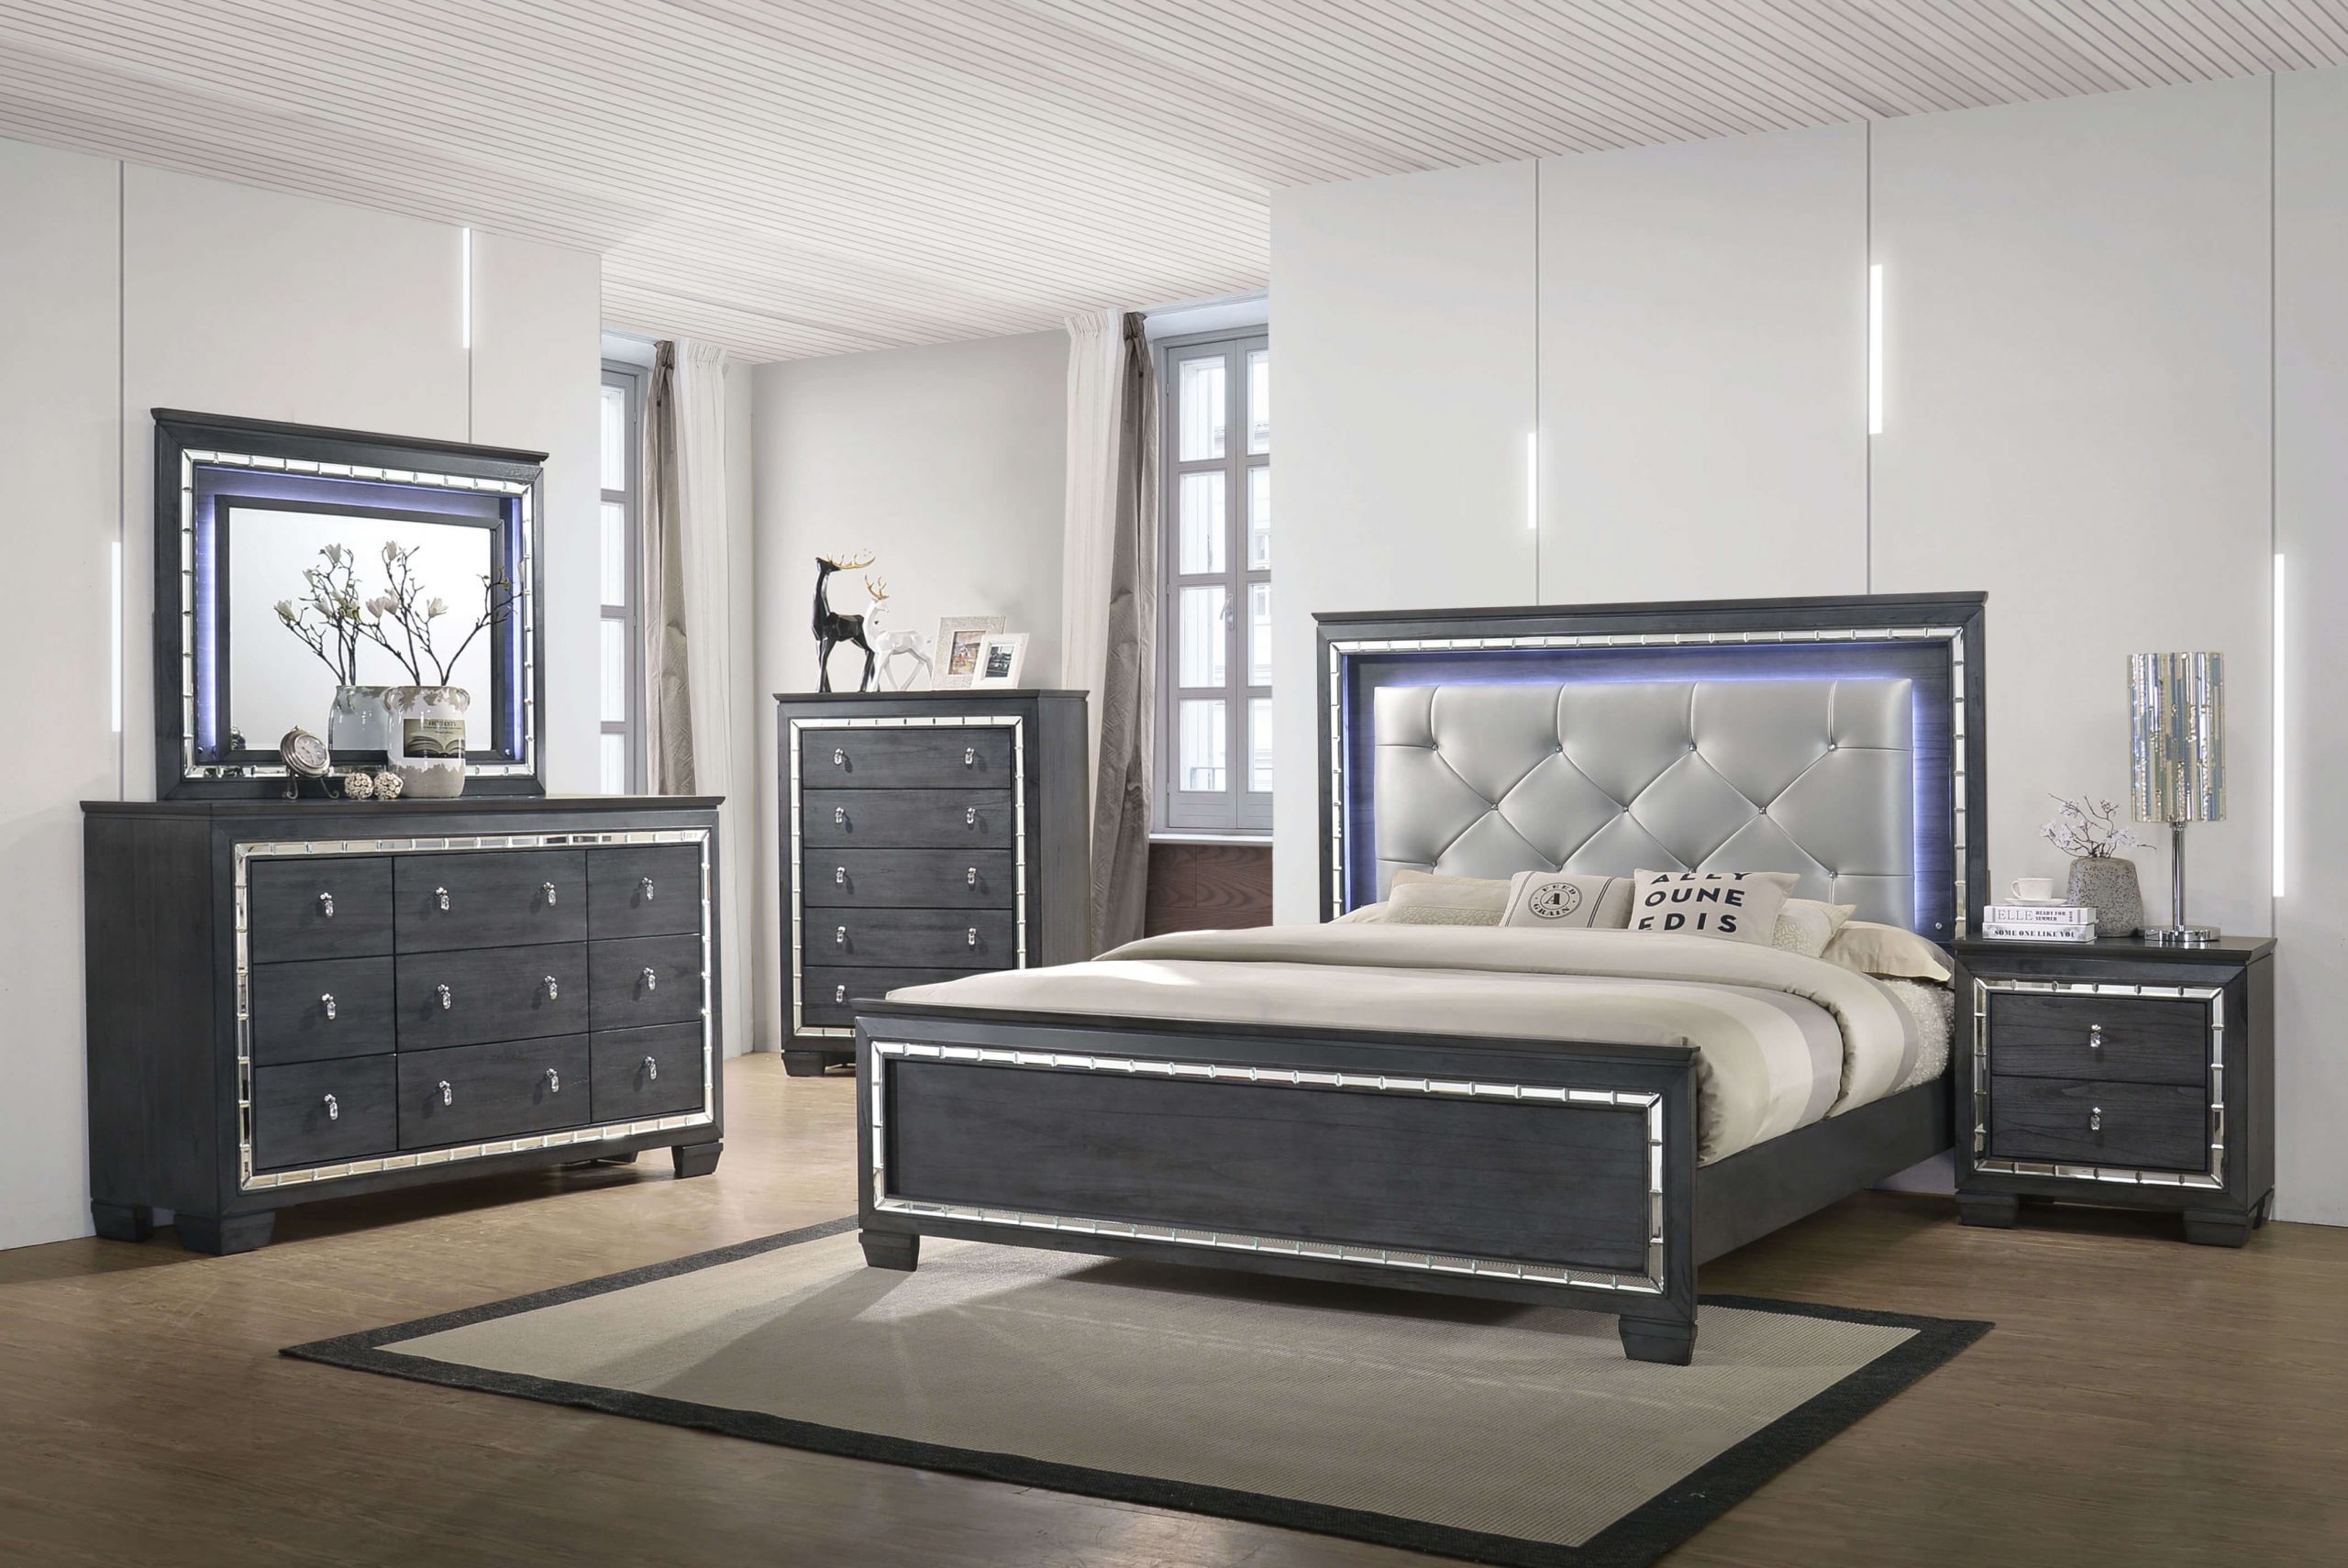 bedroom furniture with lights in headboard